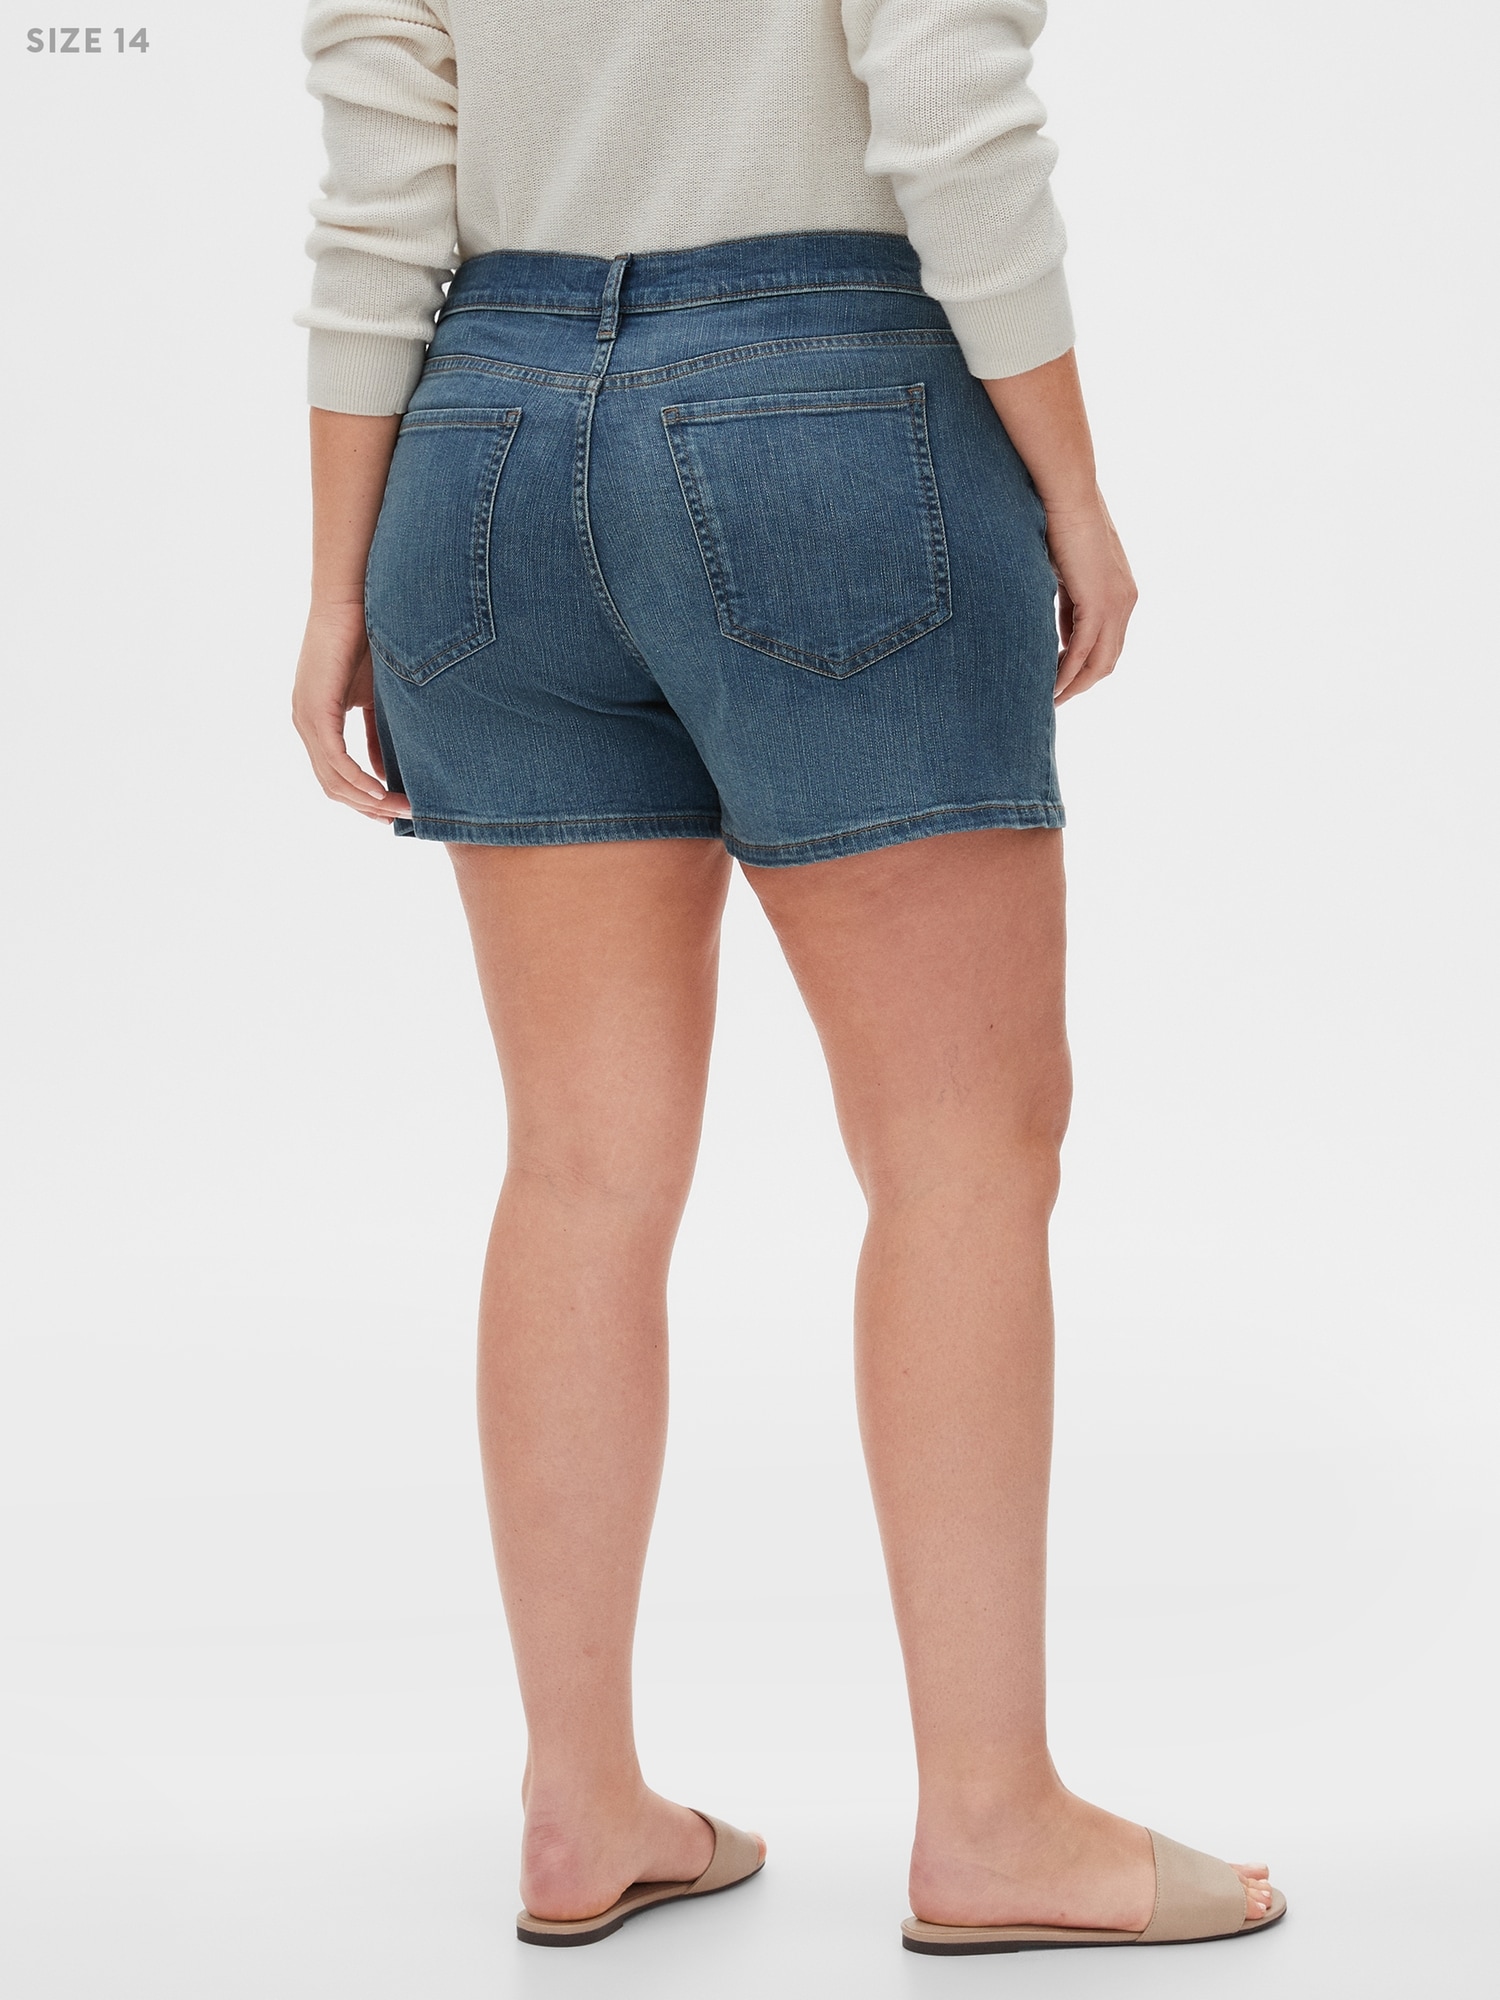 Medium Wash Denim Shorts - 4 inch inseam